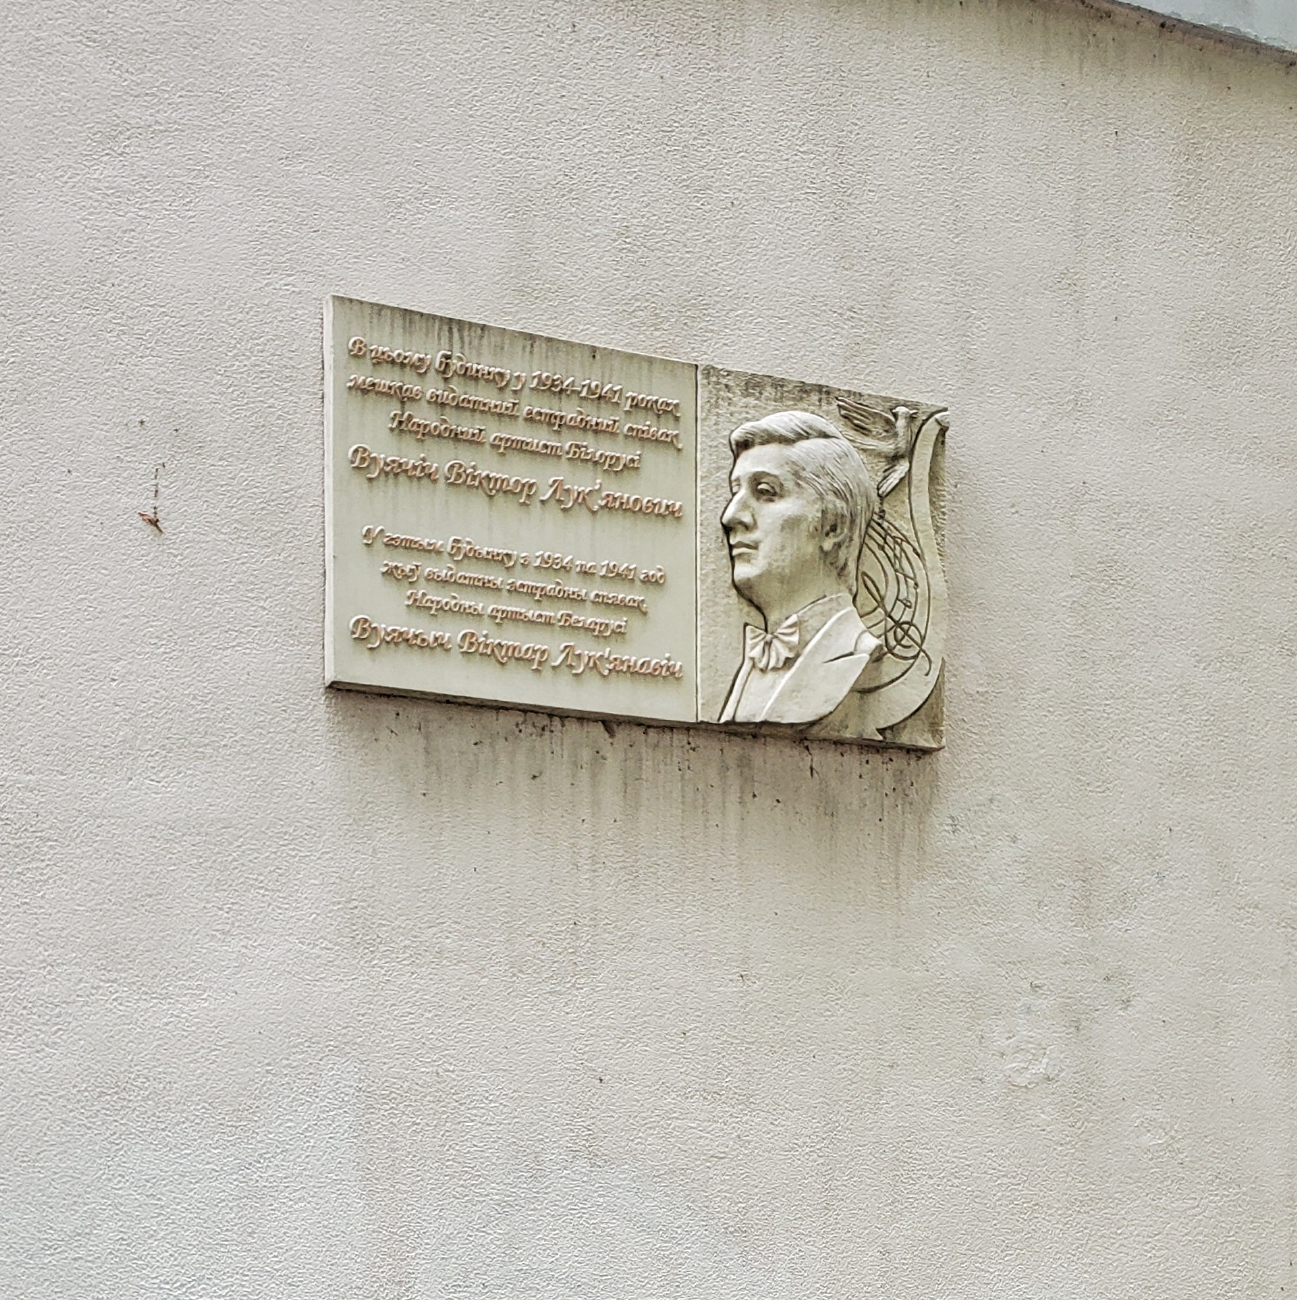 Charków, Улица Библика, 3. Charków — Memorial plaques